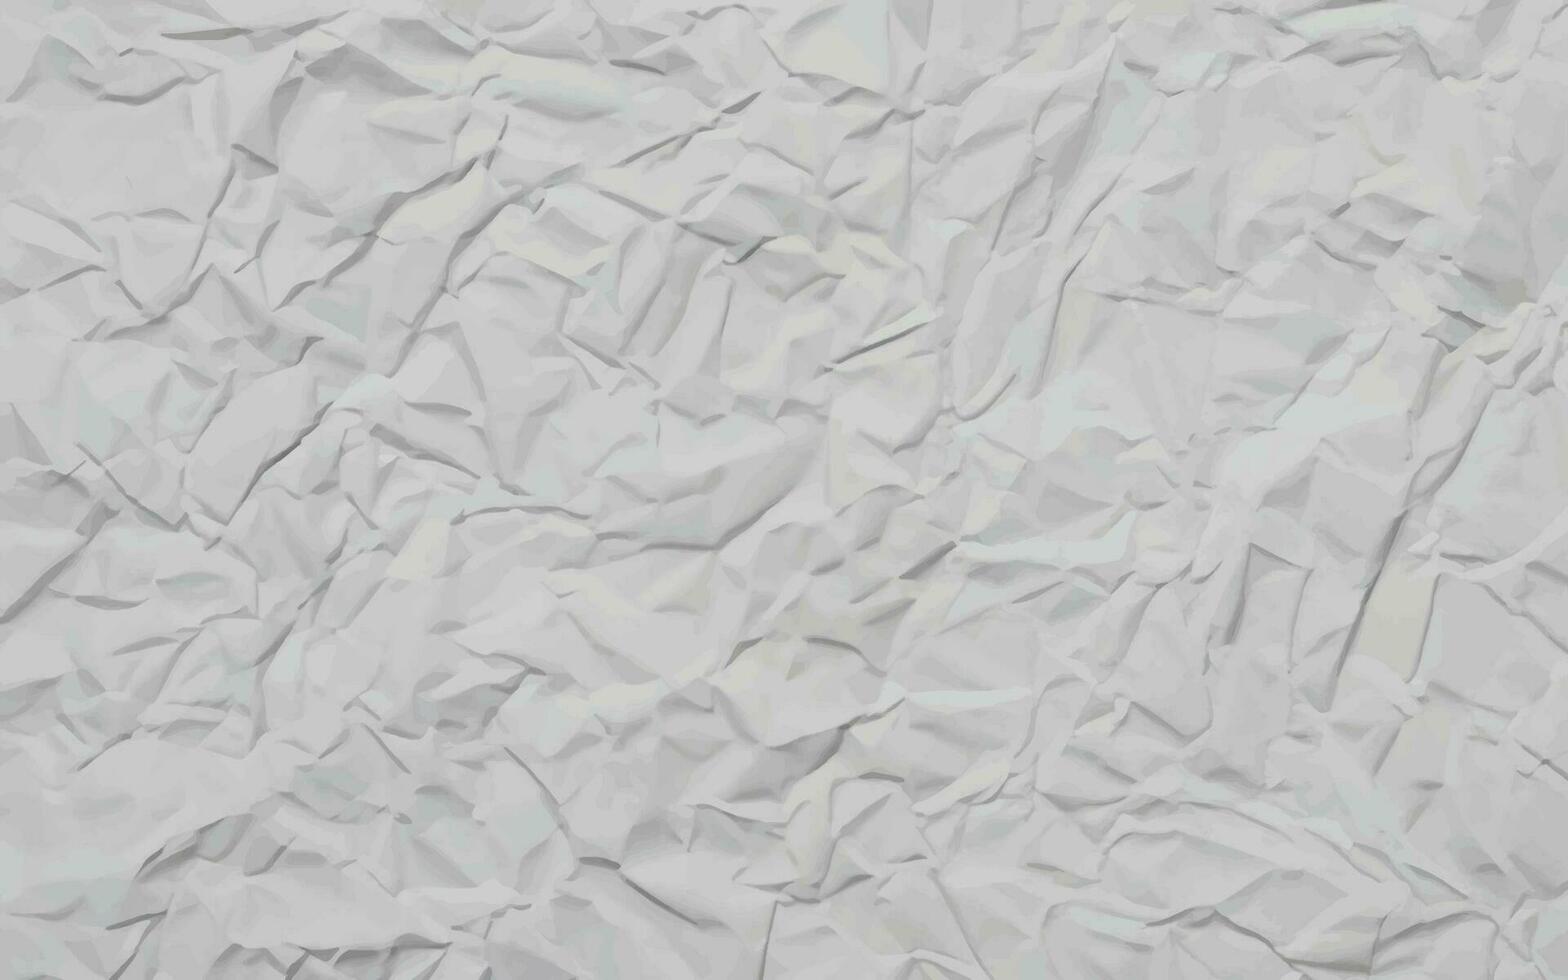 textura de papel blanco vector